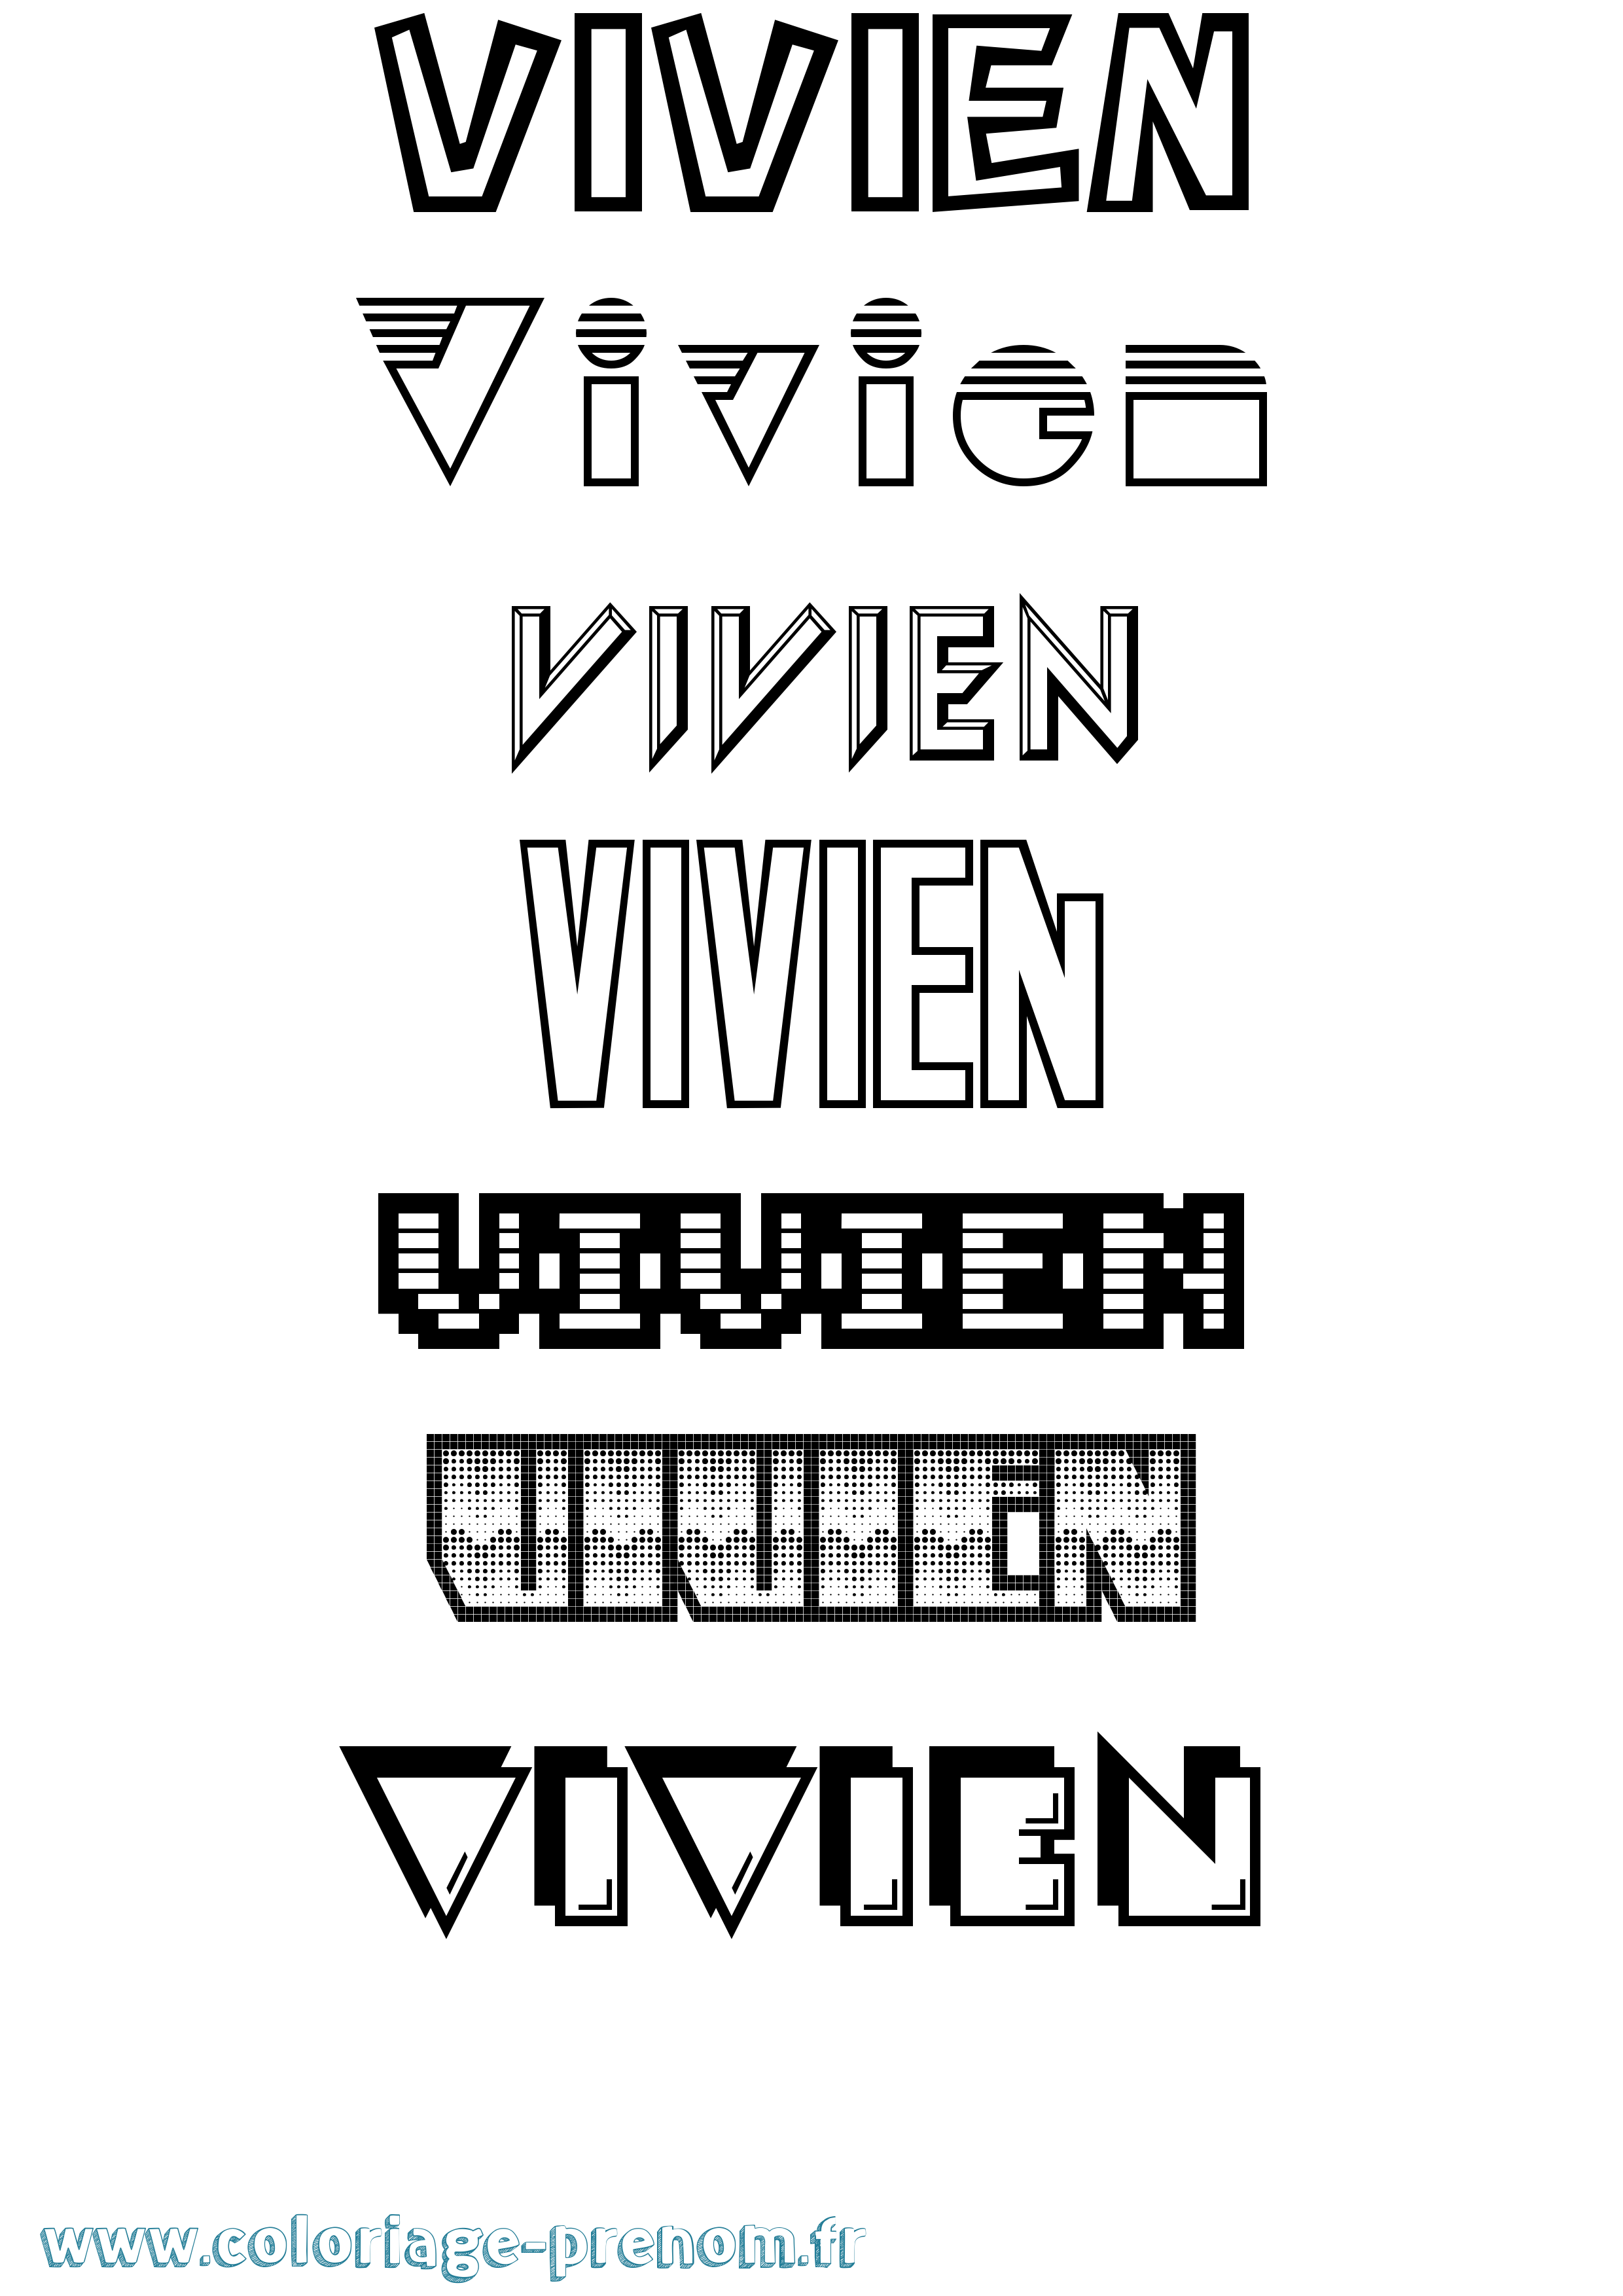 Coloriage prénom Vivien